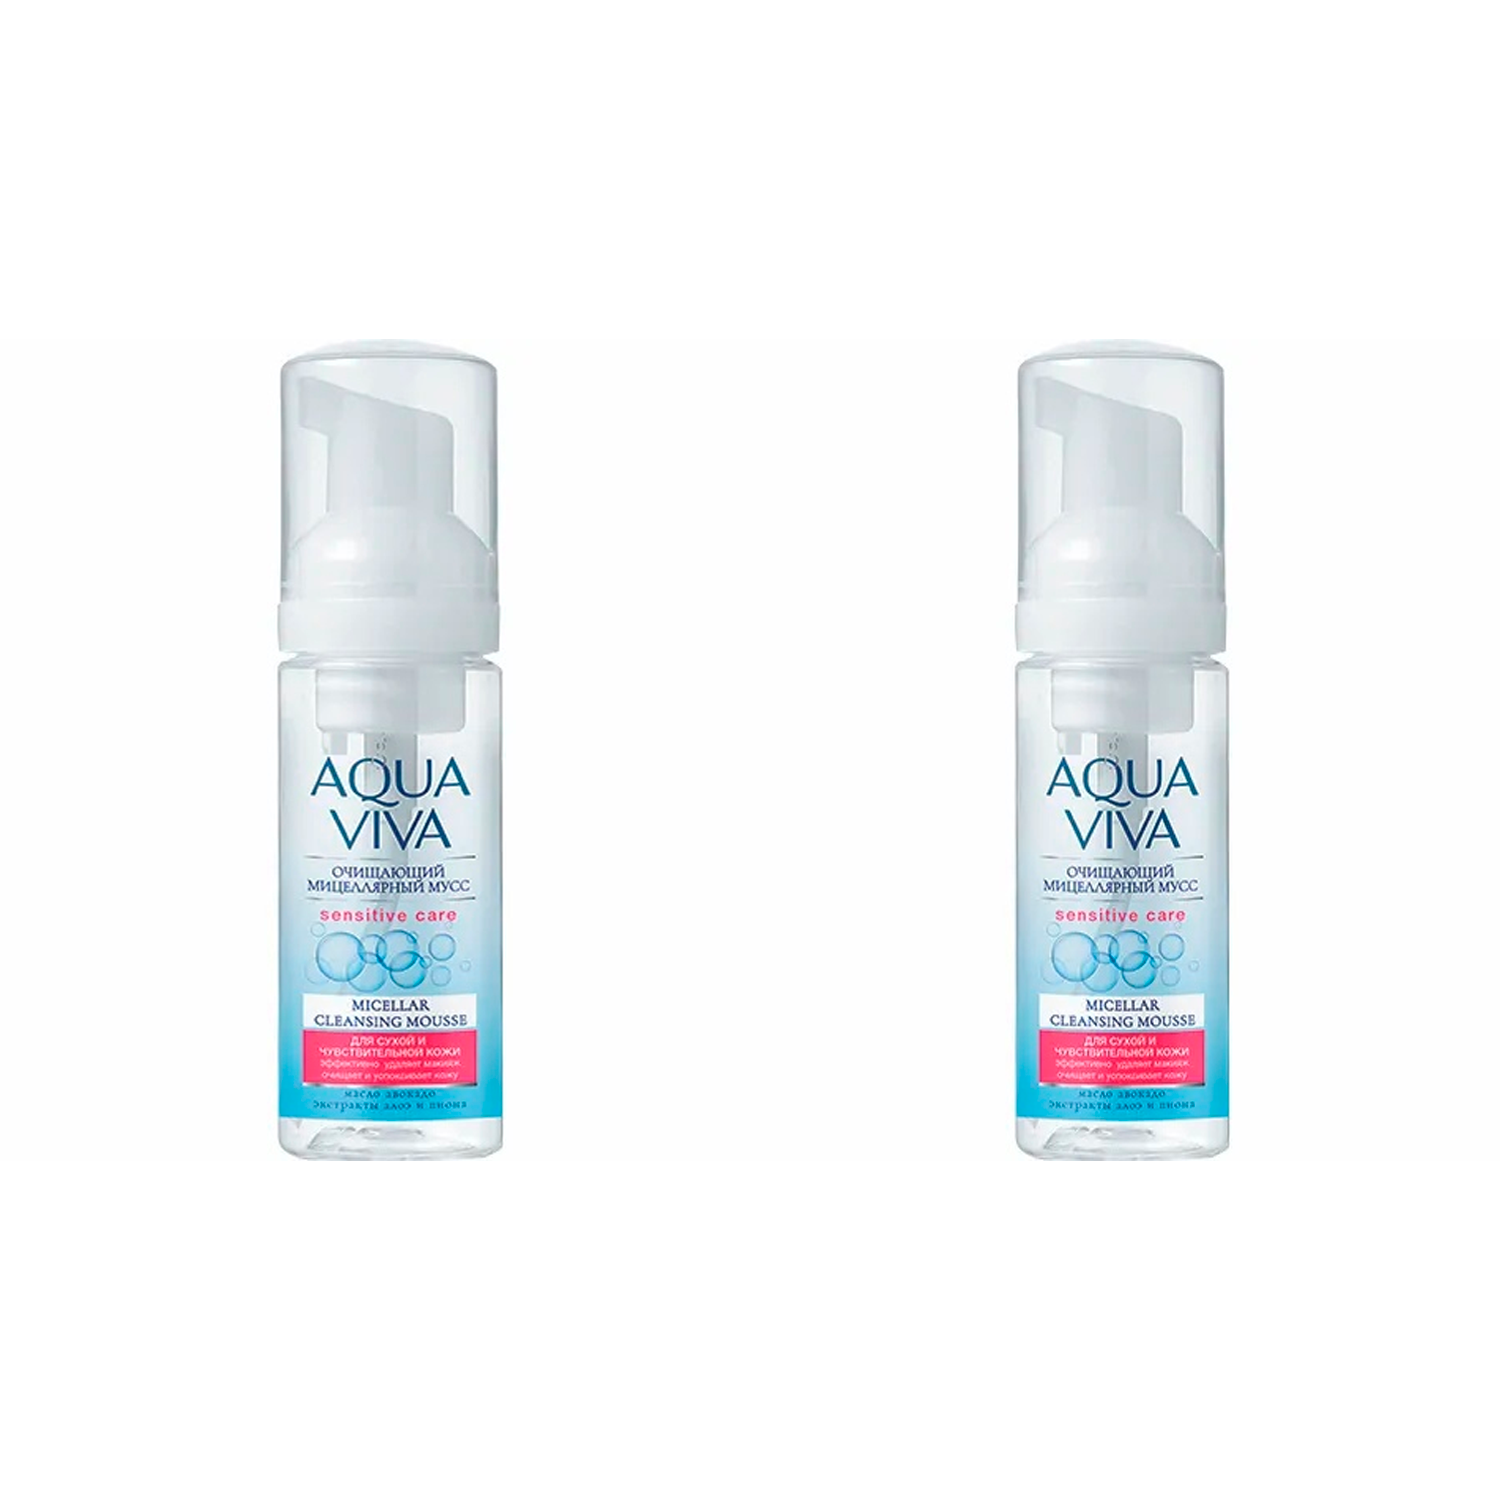 Мицеллярный мусс Romax очищающий для всех типов кожи Aqua Viva, 150 мл х 2 шт. нежный очищающий мусс soft cleansing foam